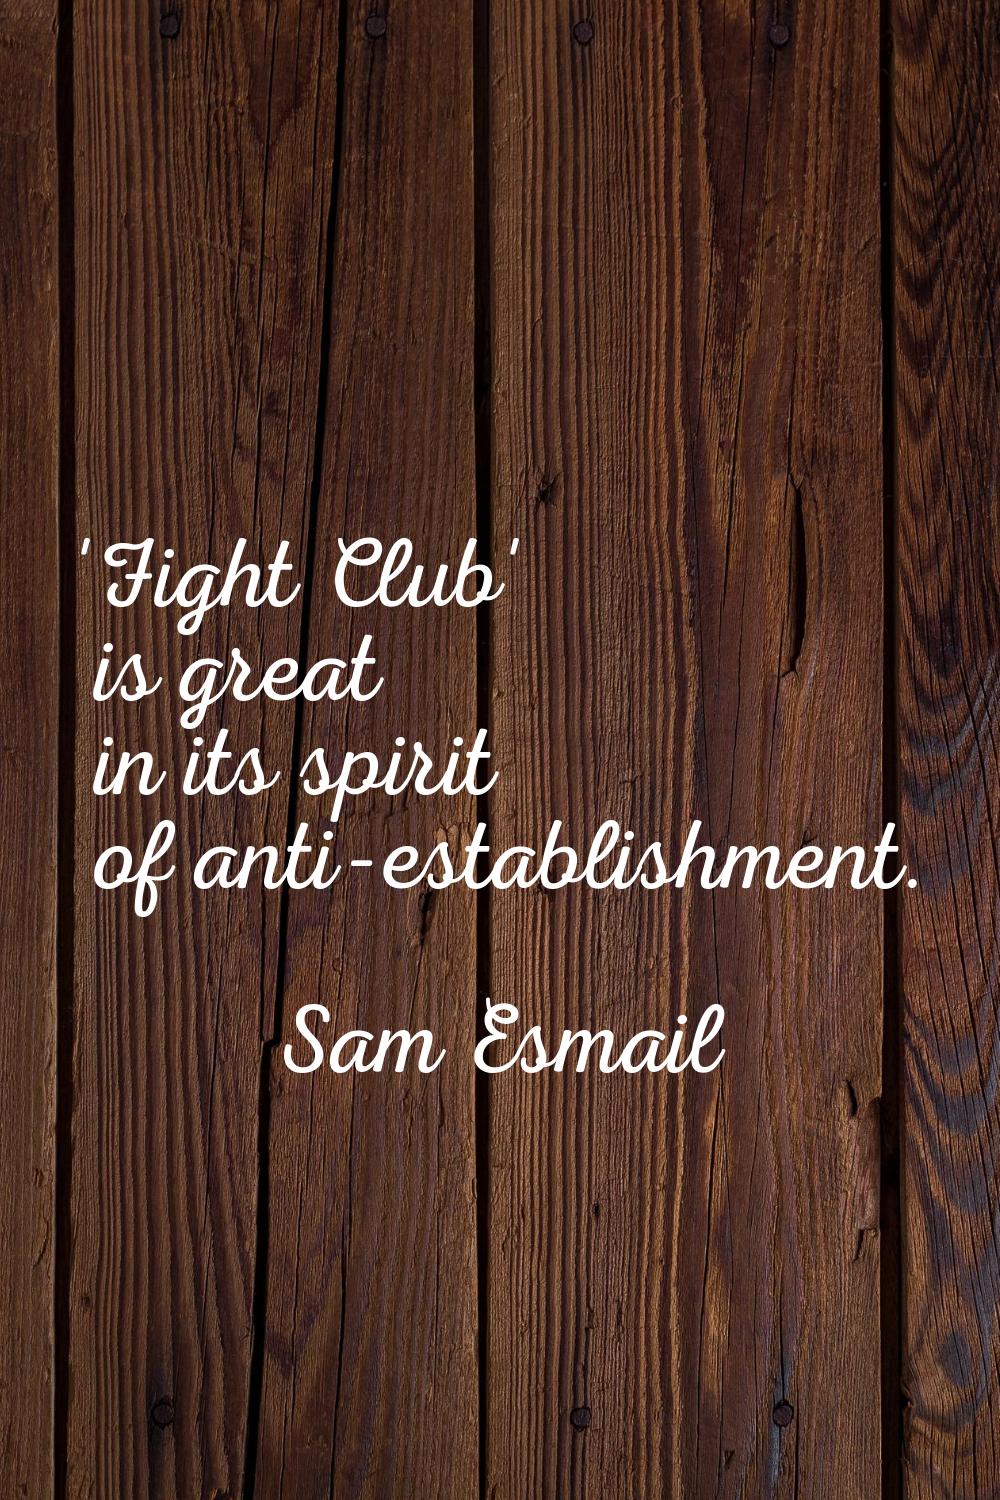 'Fight Club' is great in its spirit of anti-establishment.